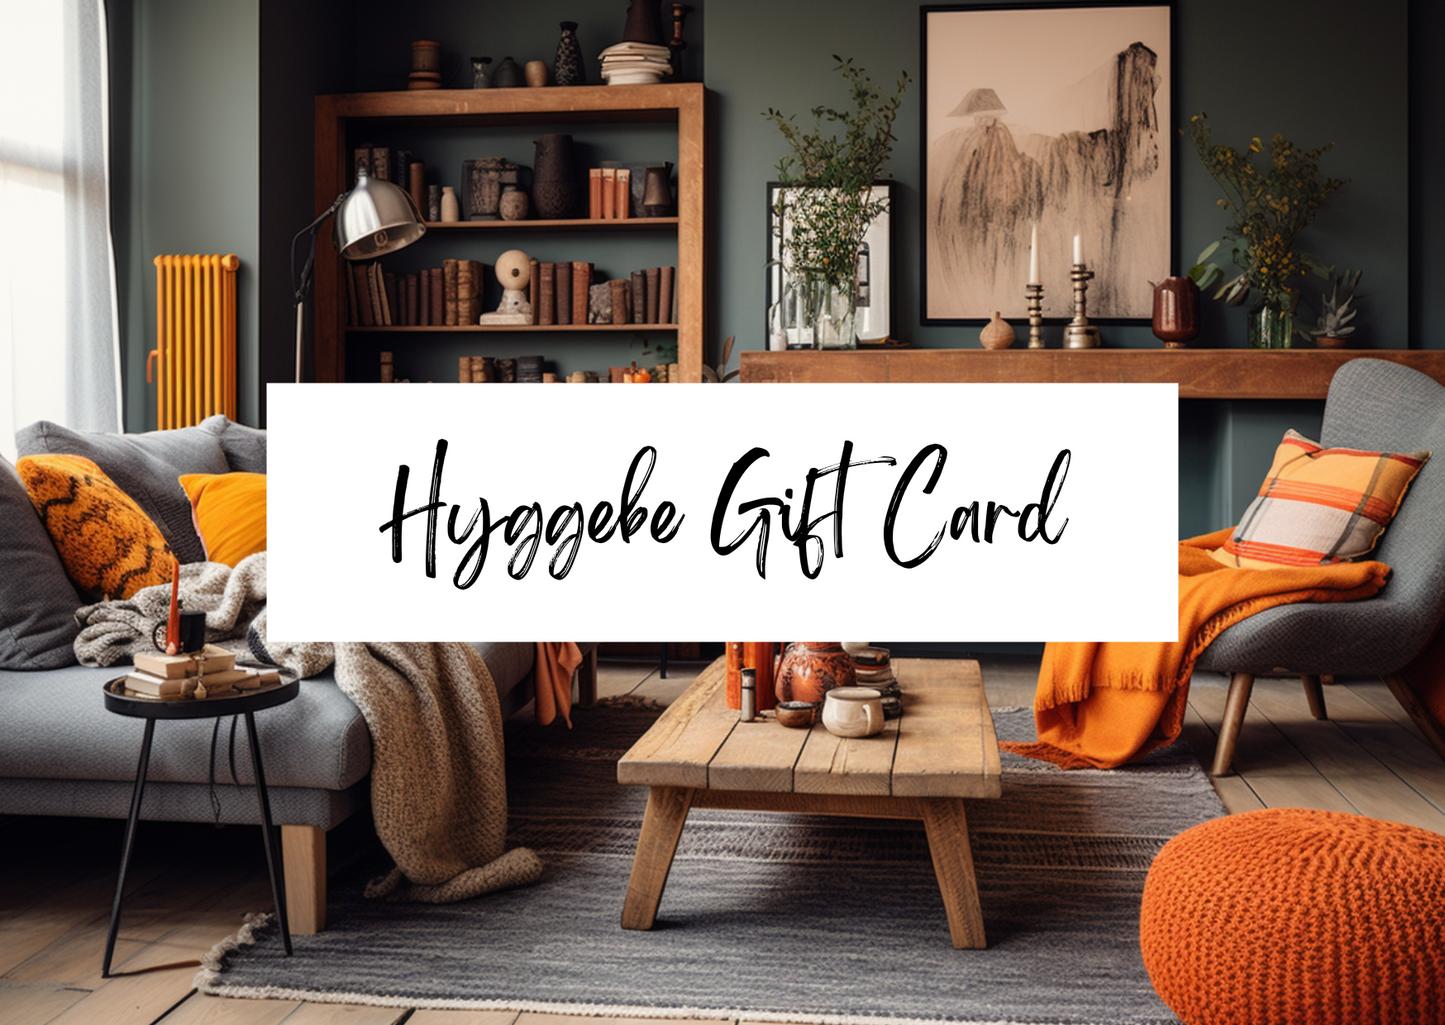 Hyggebe gift card